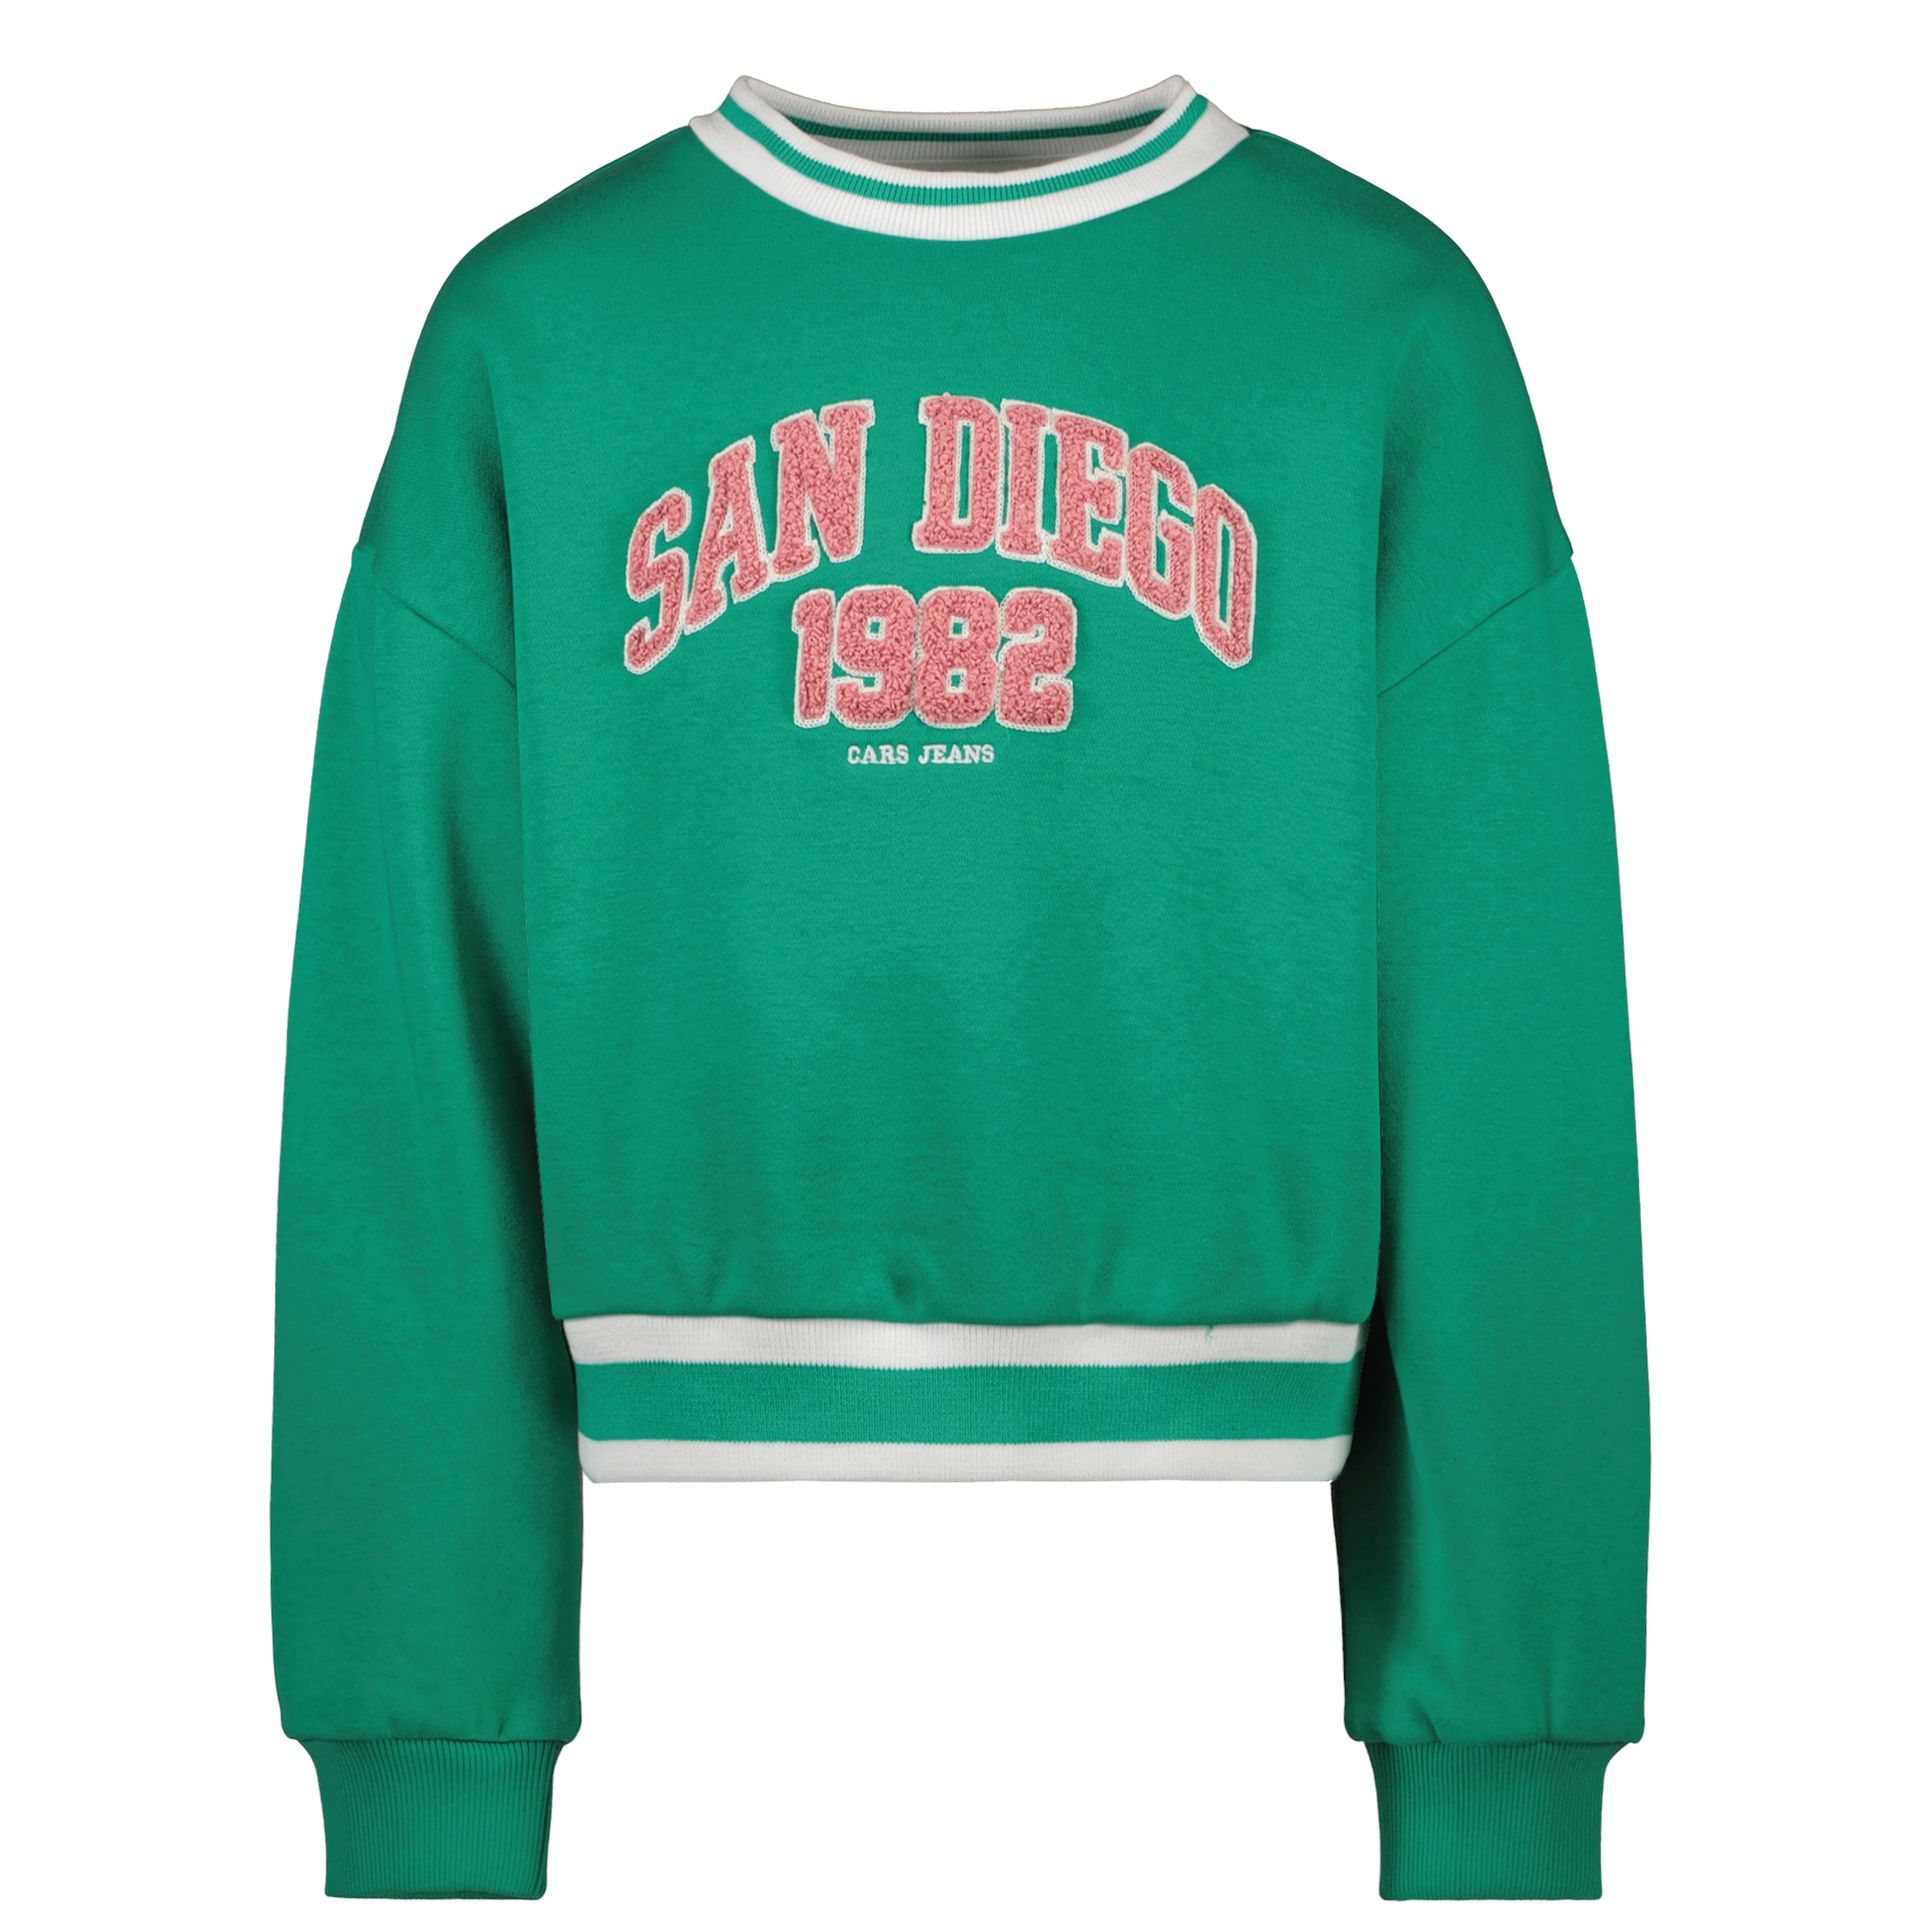 Cars jeans Sweater Sandie Jr. 55 green 00105621-EKA03000200000033